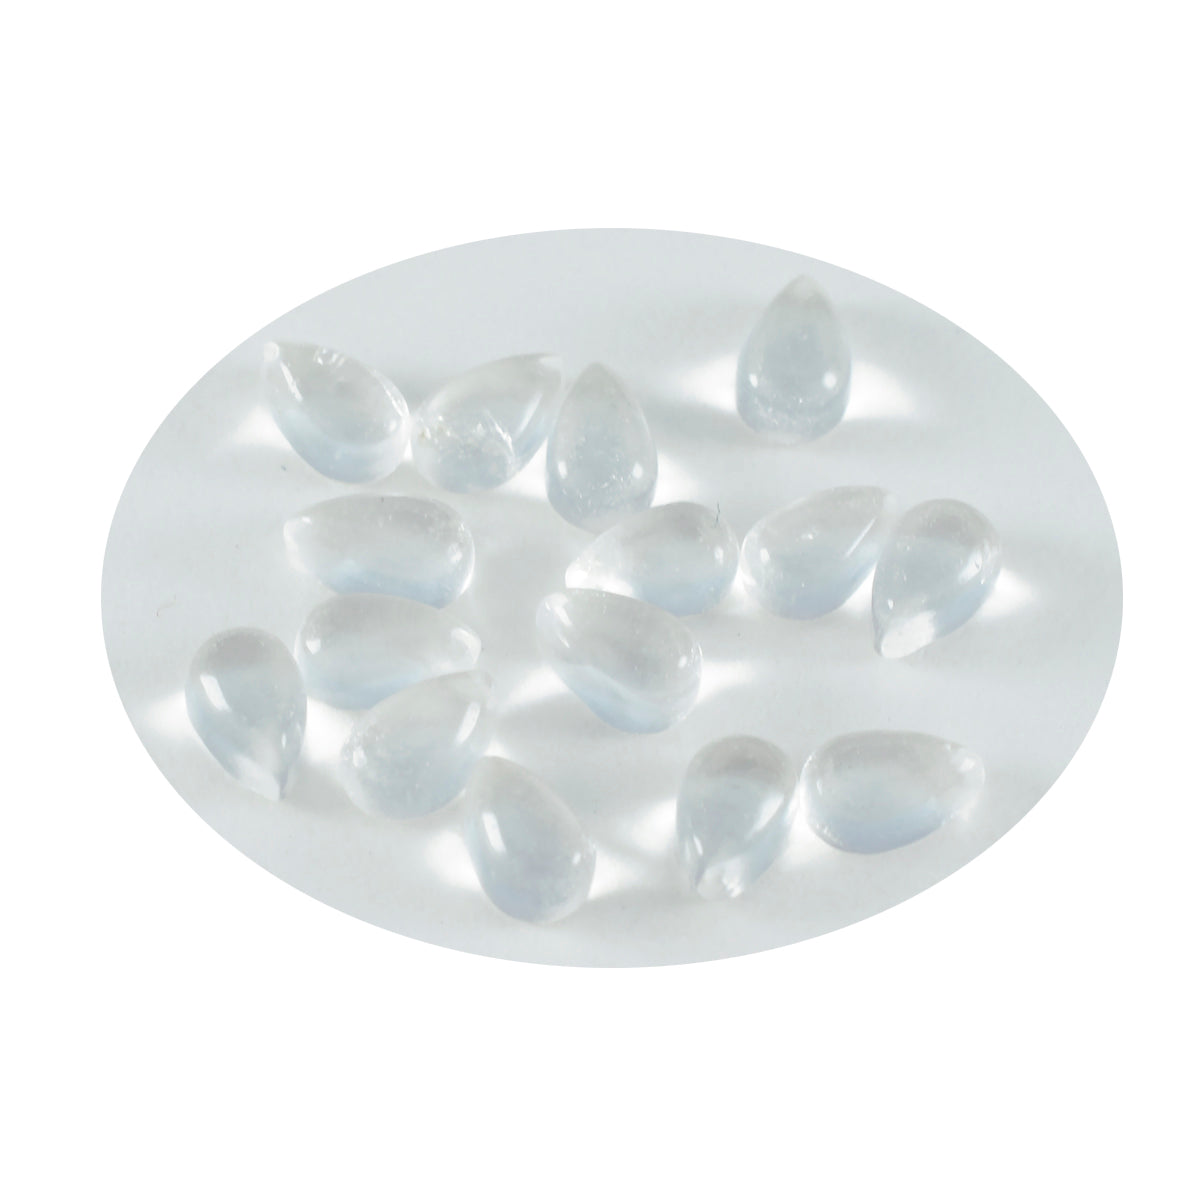 riyogems 1 st vit kristall kvarts cabochon 5x7 mm päronform superb kvalitet lös ädelsten